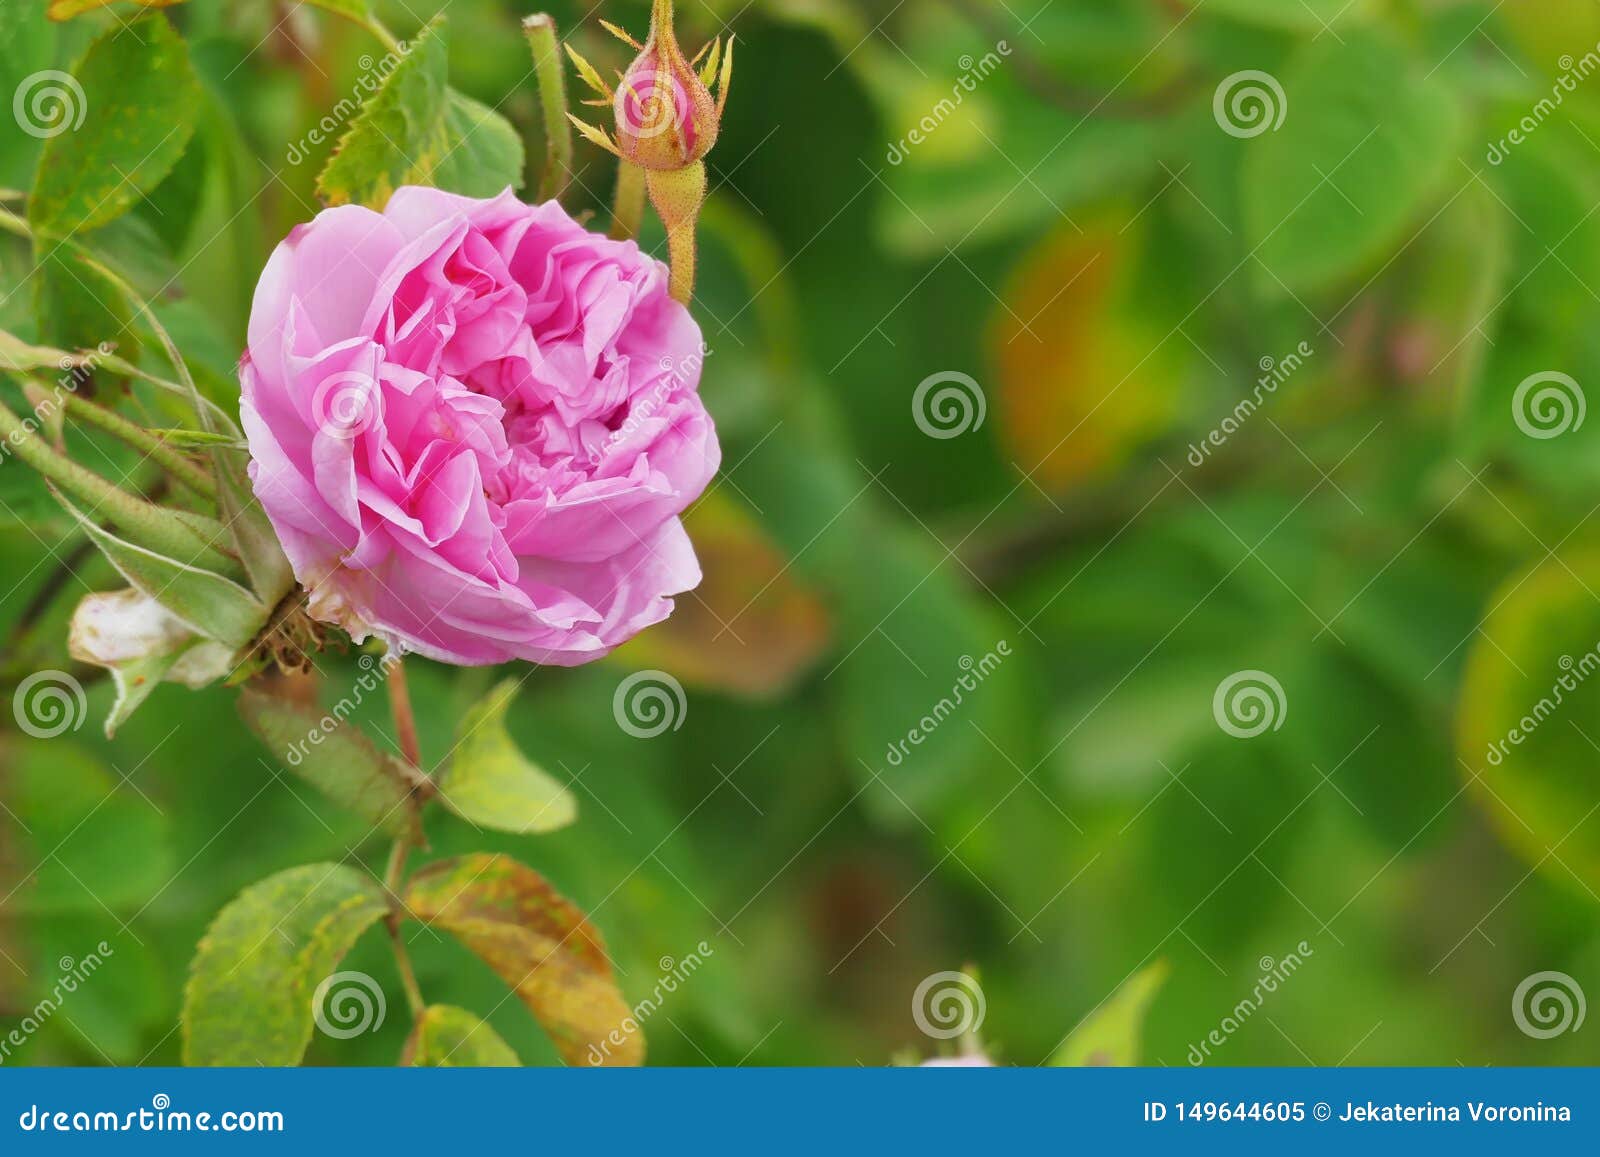 beautiful bulgarian damask rose